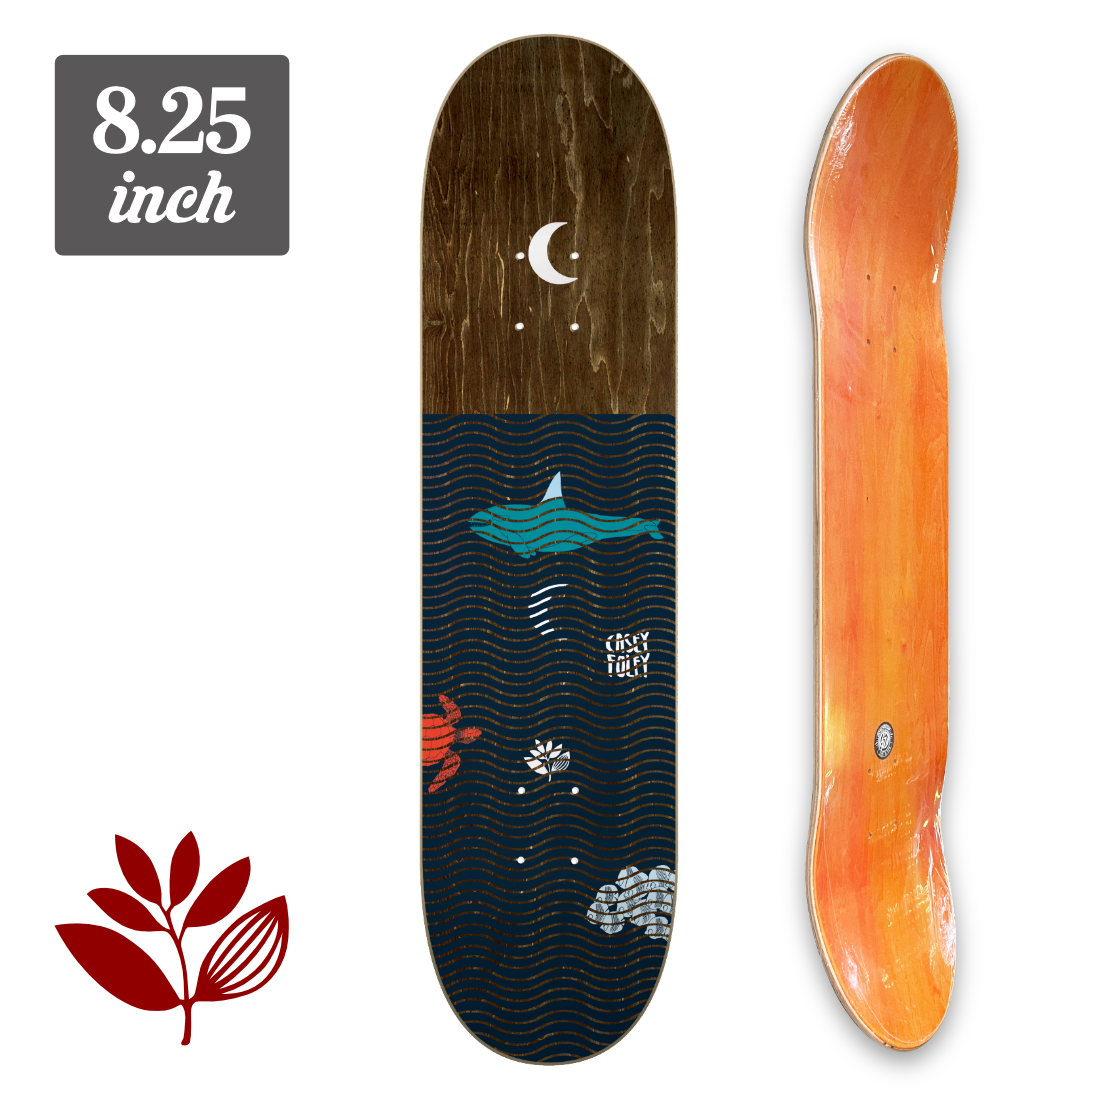 【8.25】Magenta Skateboards - Deep Siries "Casey Foley"